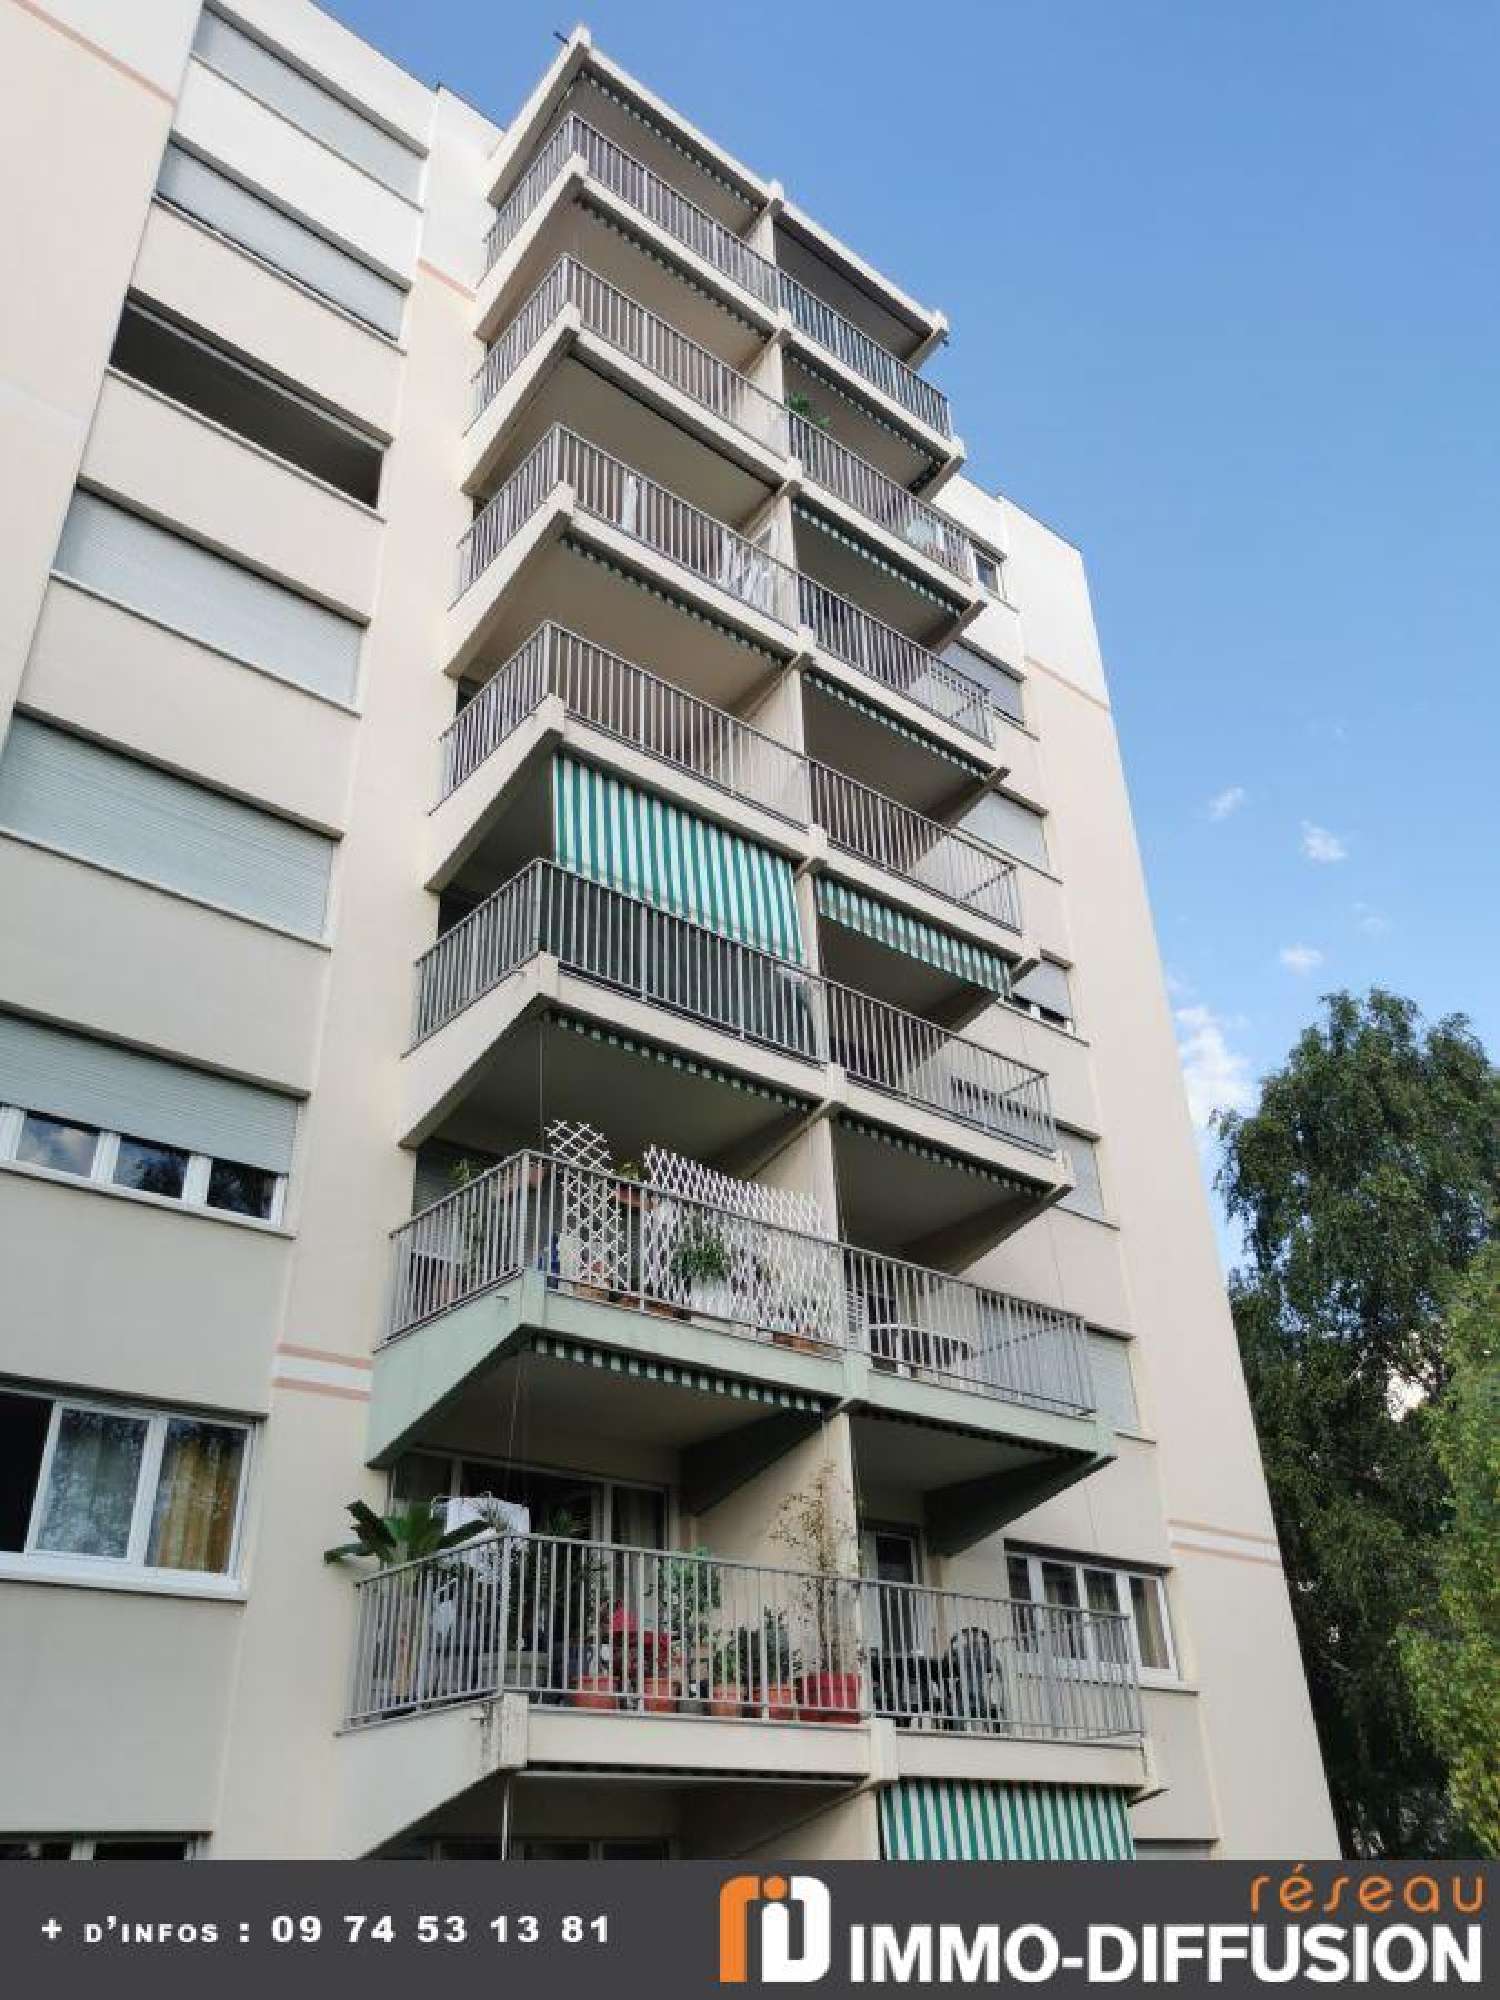  à vendre appartement Sainte-Foy-lès-Lyon Rhône 1